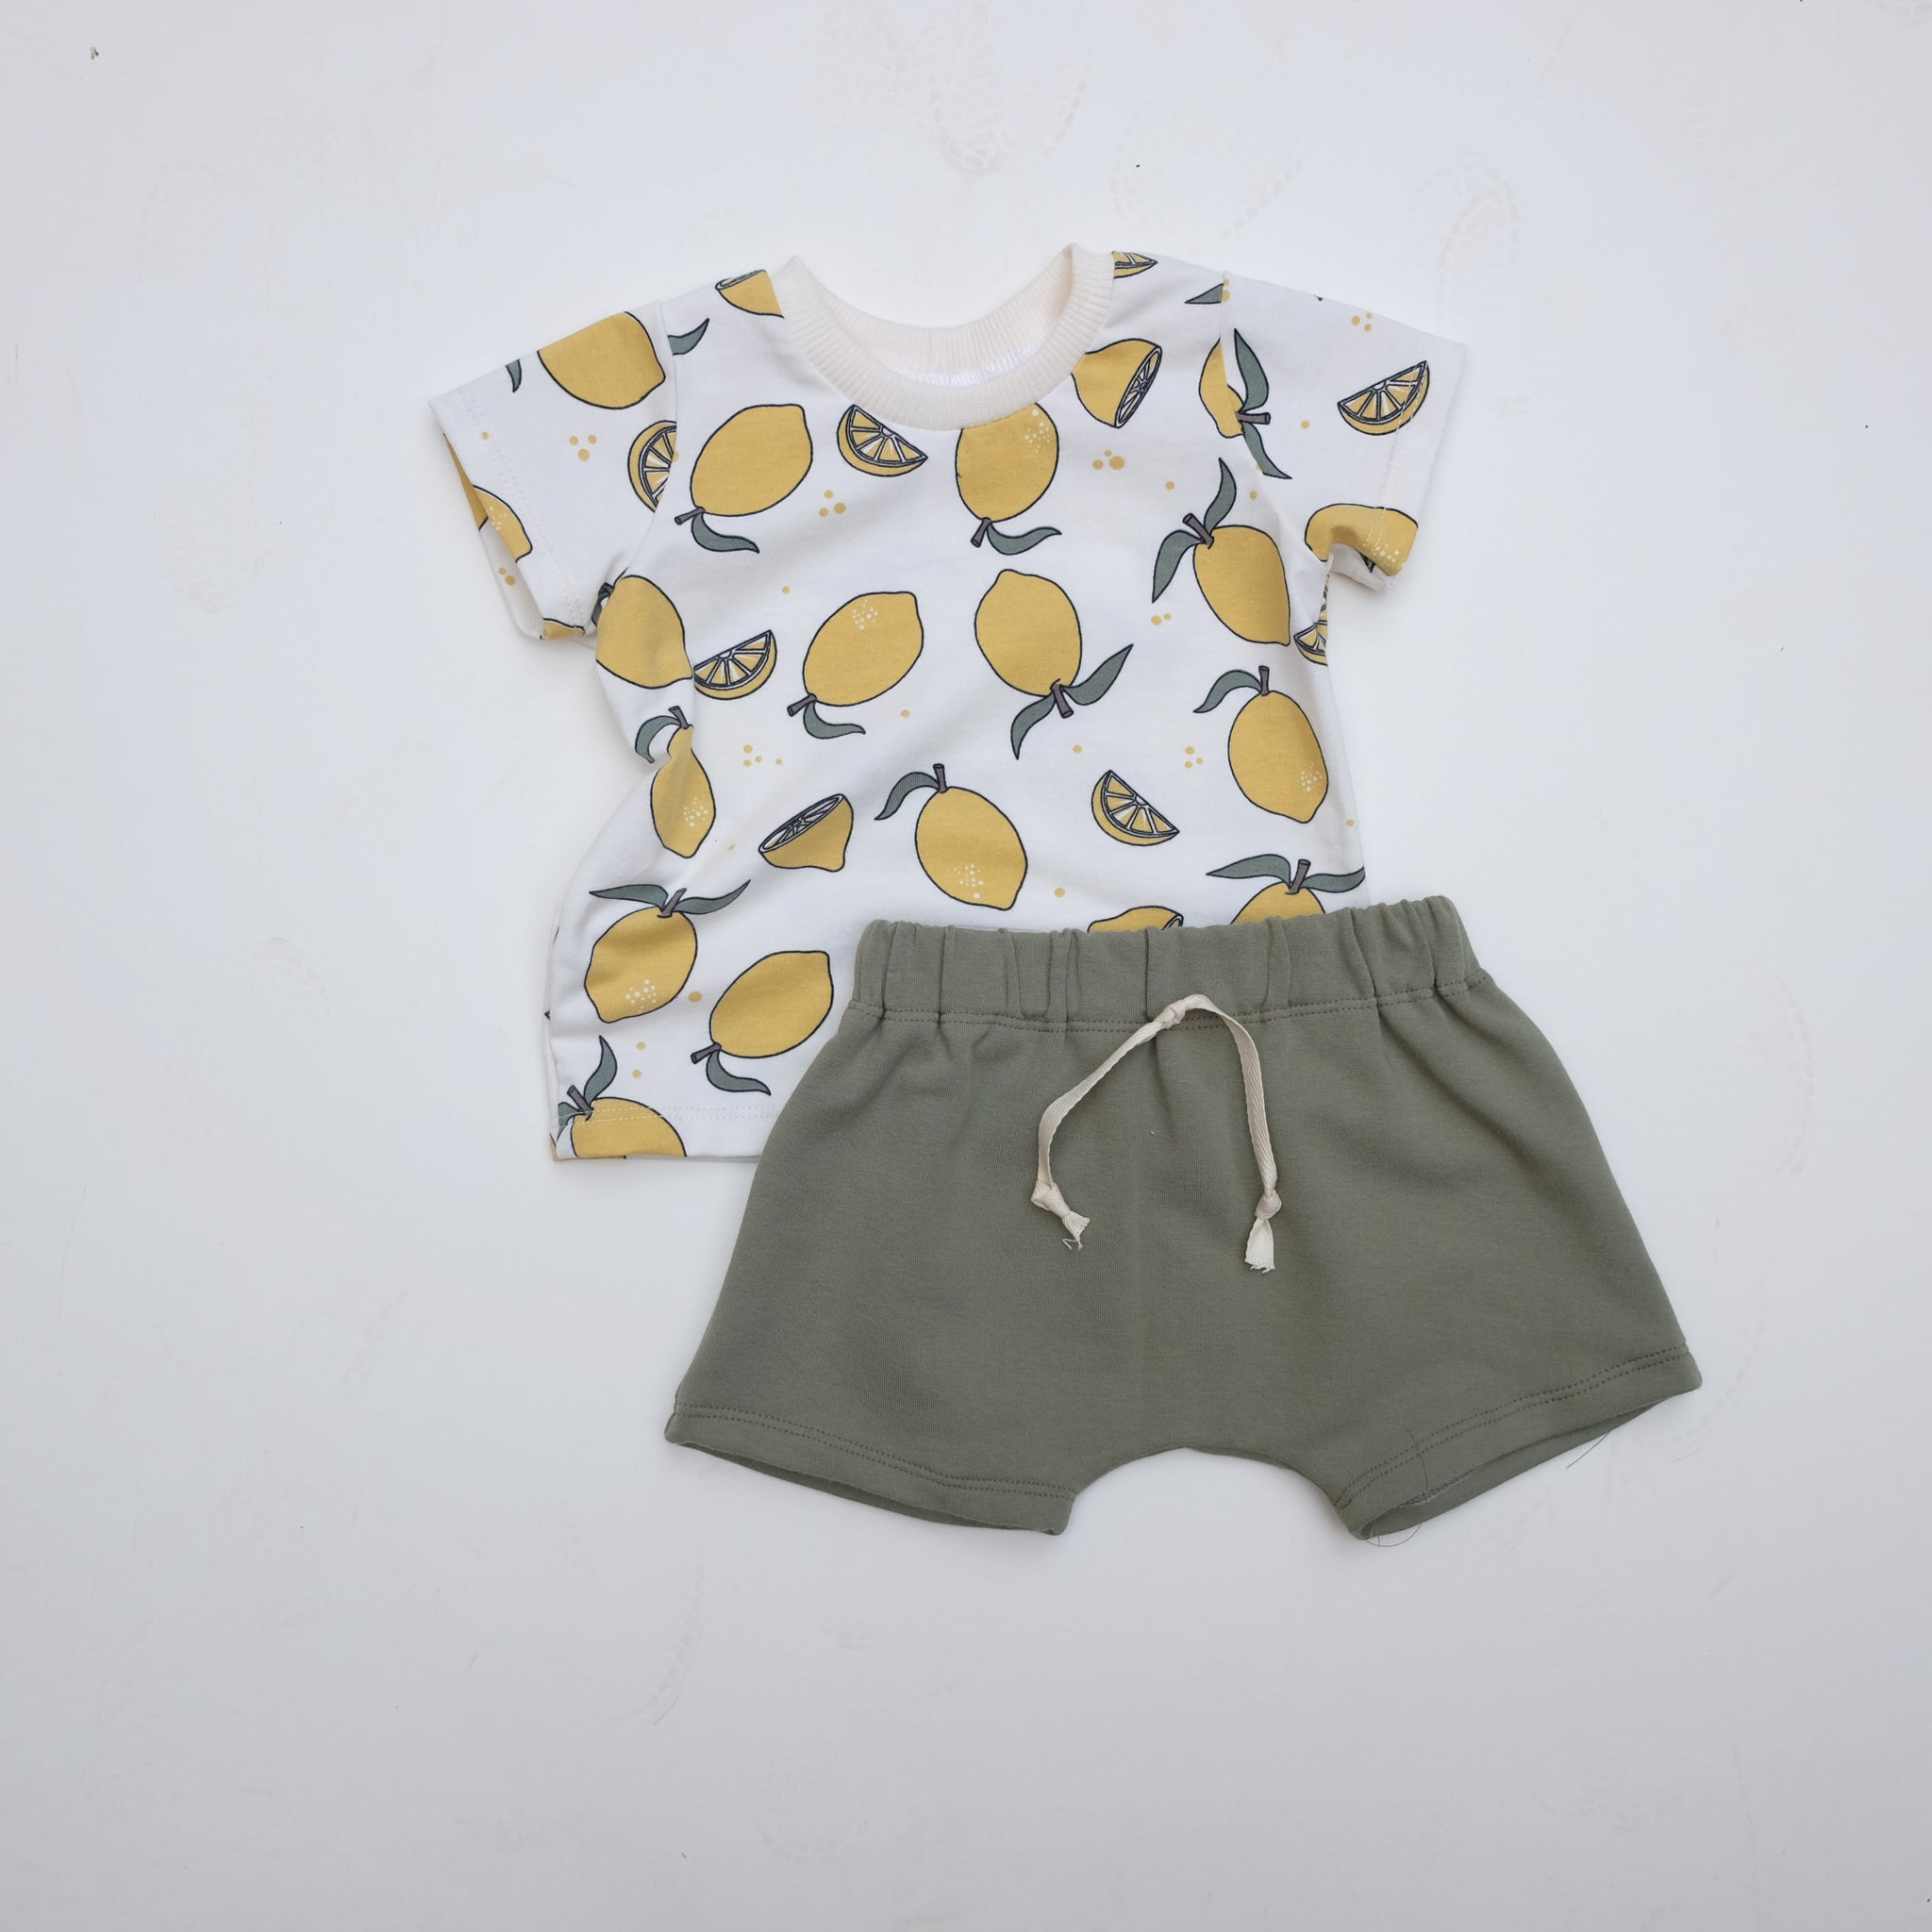 Camiseta limones & pantalón corto green talla 6-9 meses.